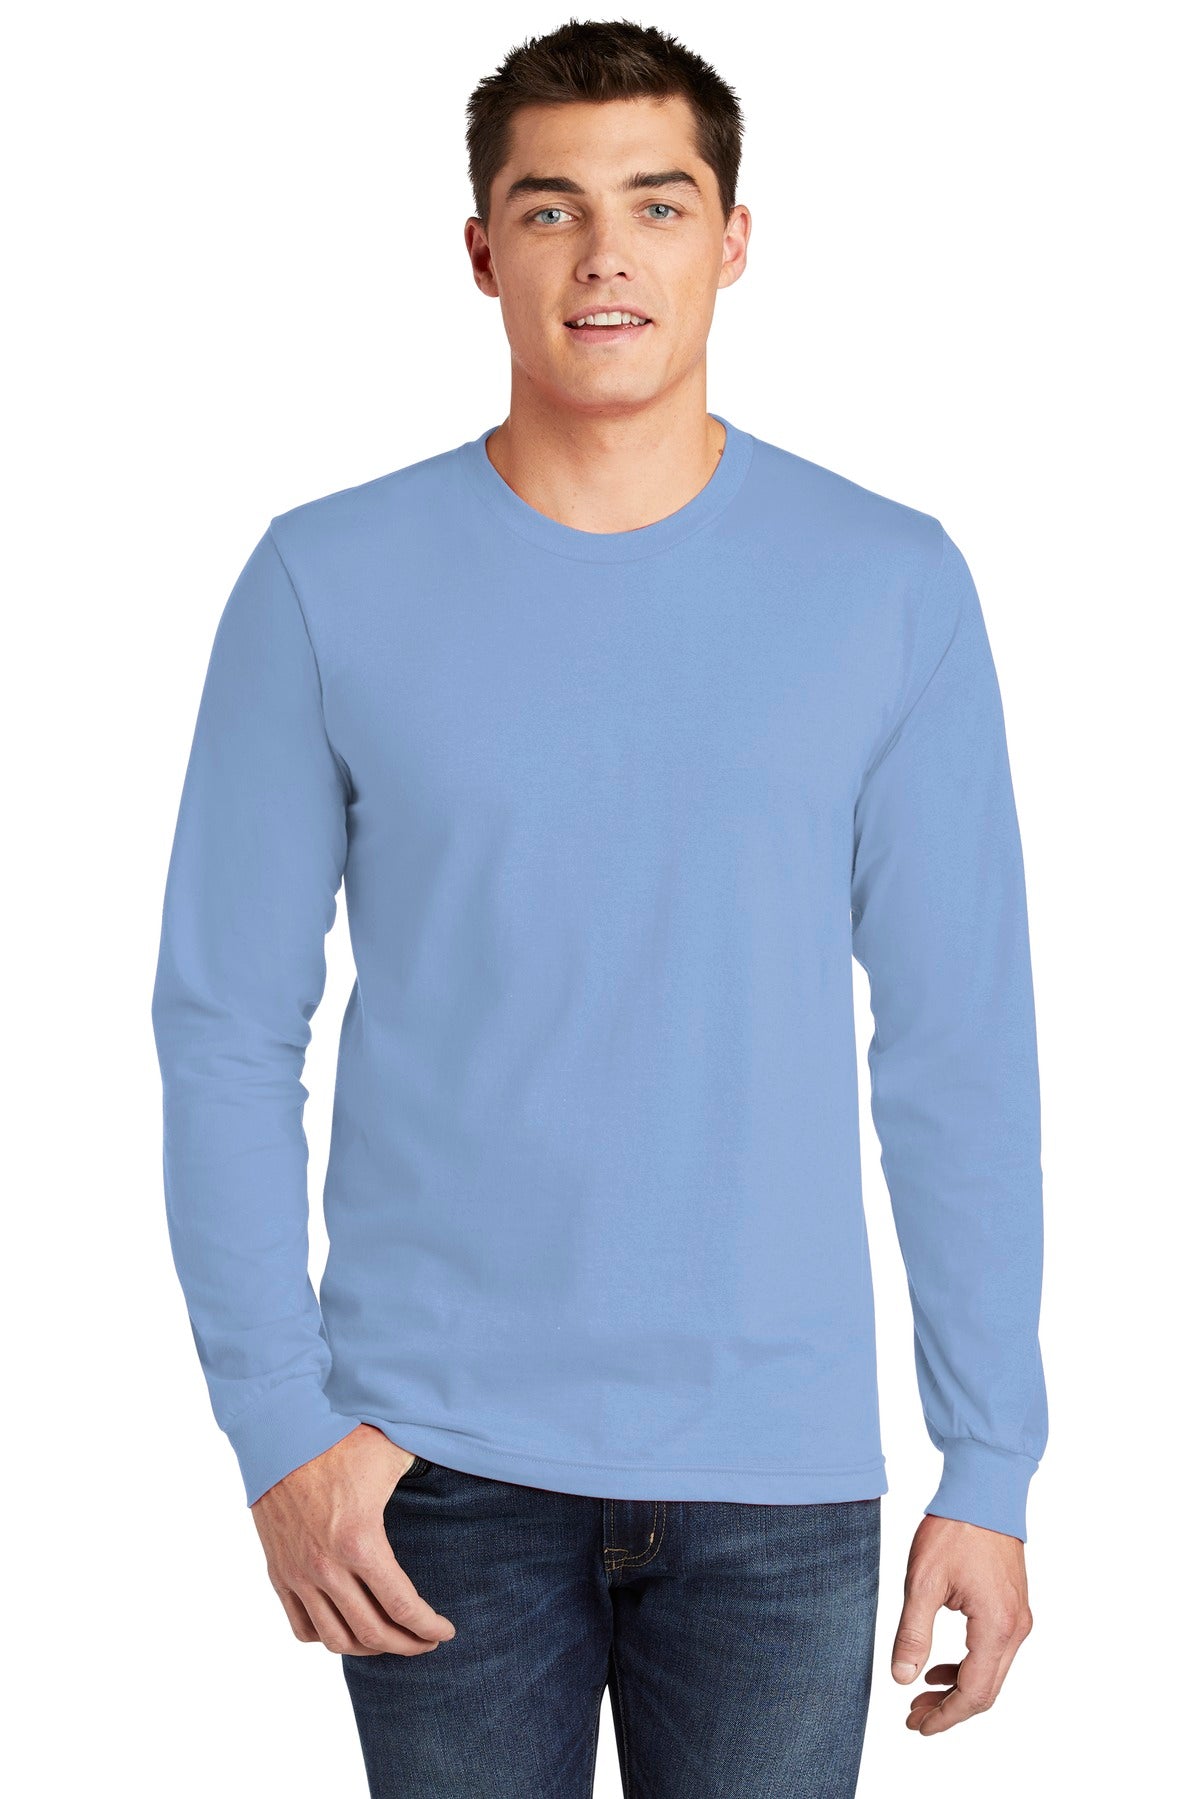 American Apparel ® Fine Jersey Long Sleeve T-Shirt. 2007W - DFW Impression